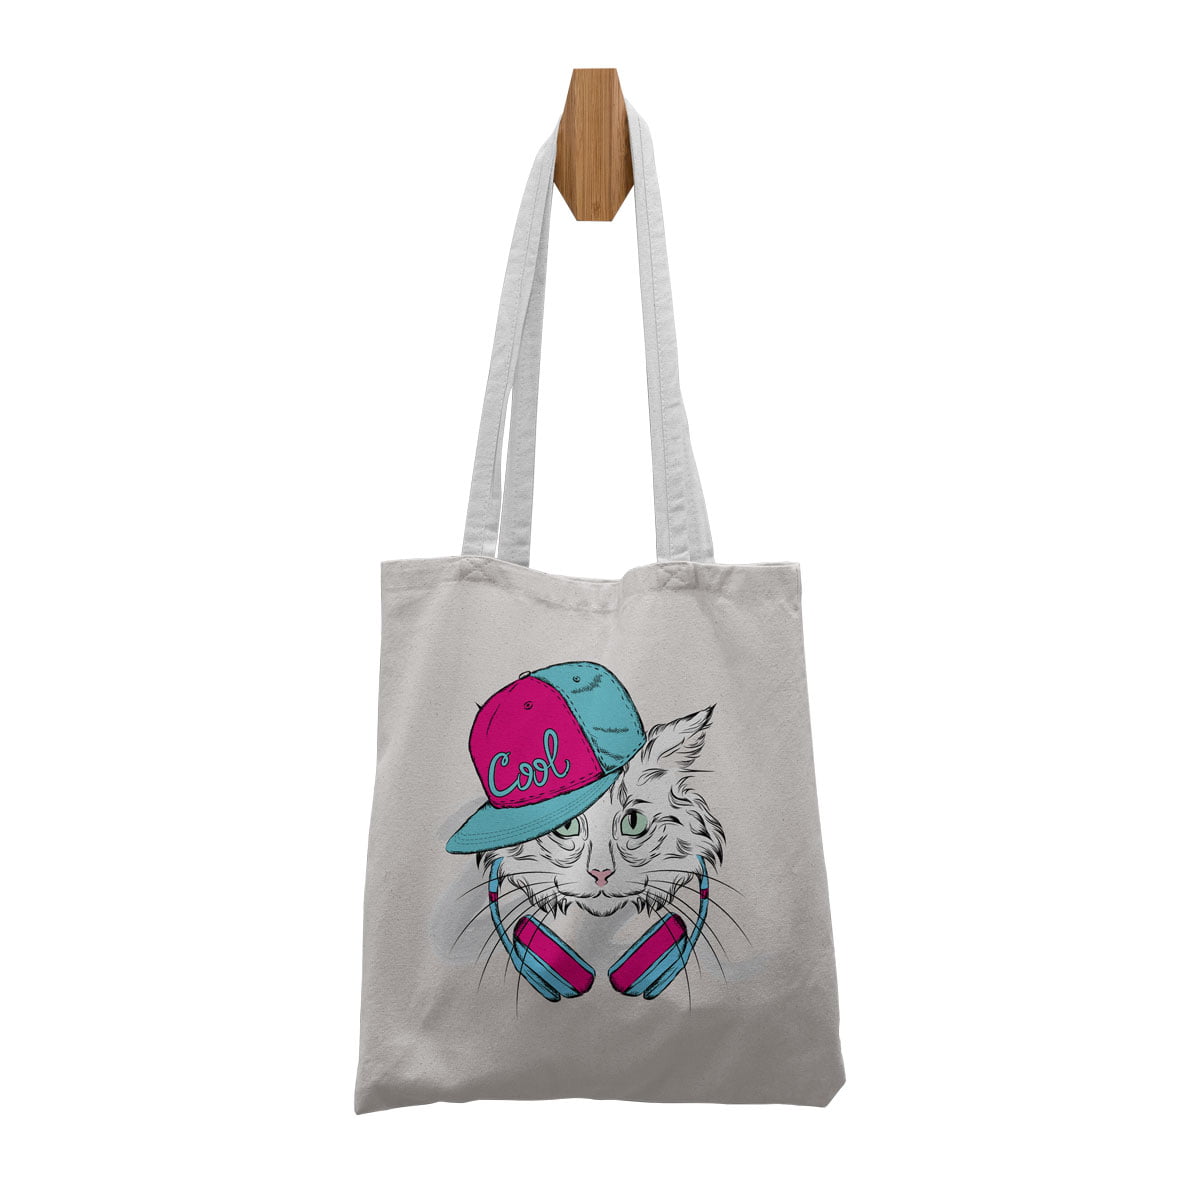 Dj cool kedi canta - cool dj kedi tasarımlı bez çanta - figurex